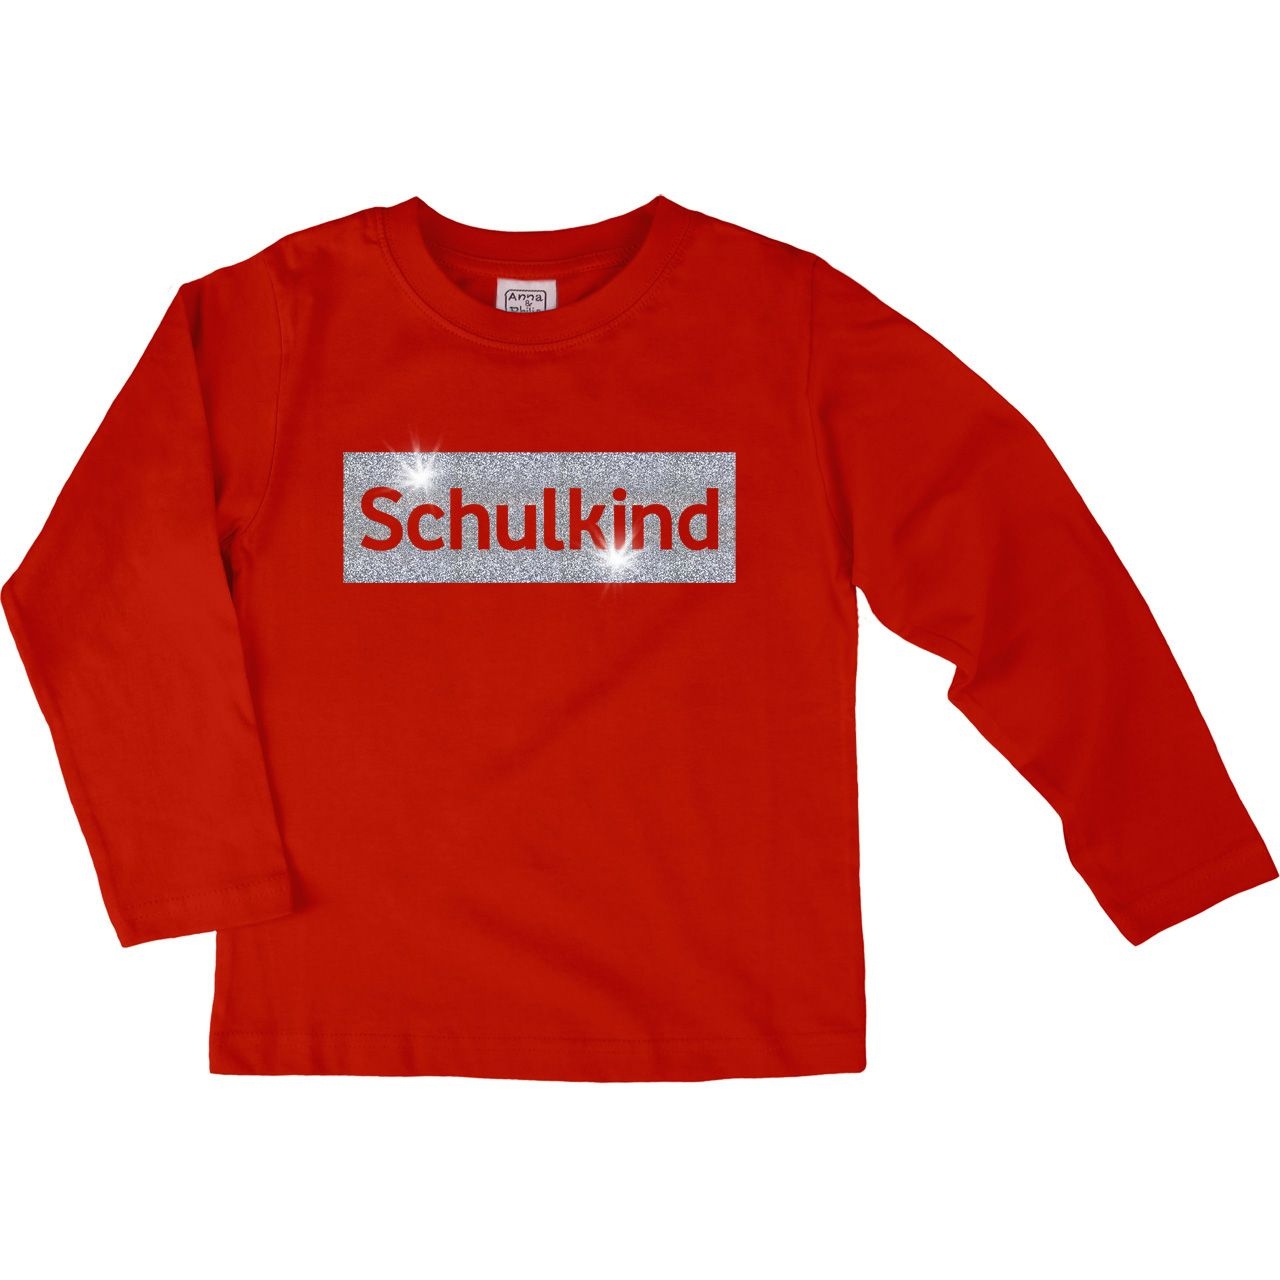 Schulkind Glitzer Kinder Langarm Shirt rot 122 / 128